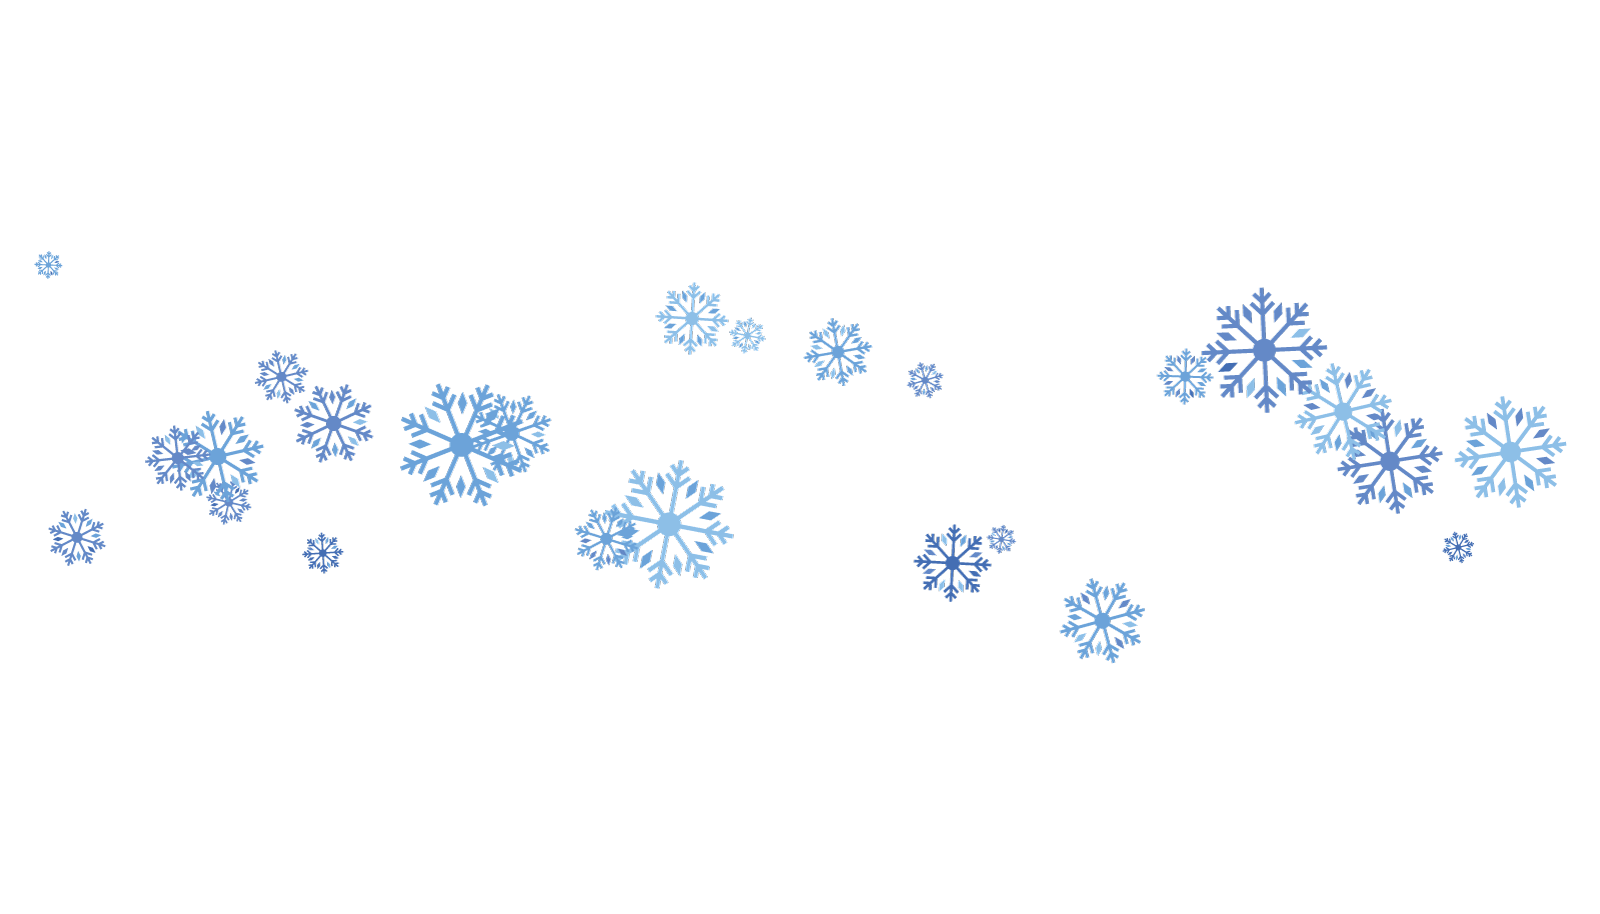 Snowflakes background snowfall design illustration template